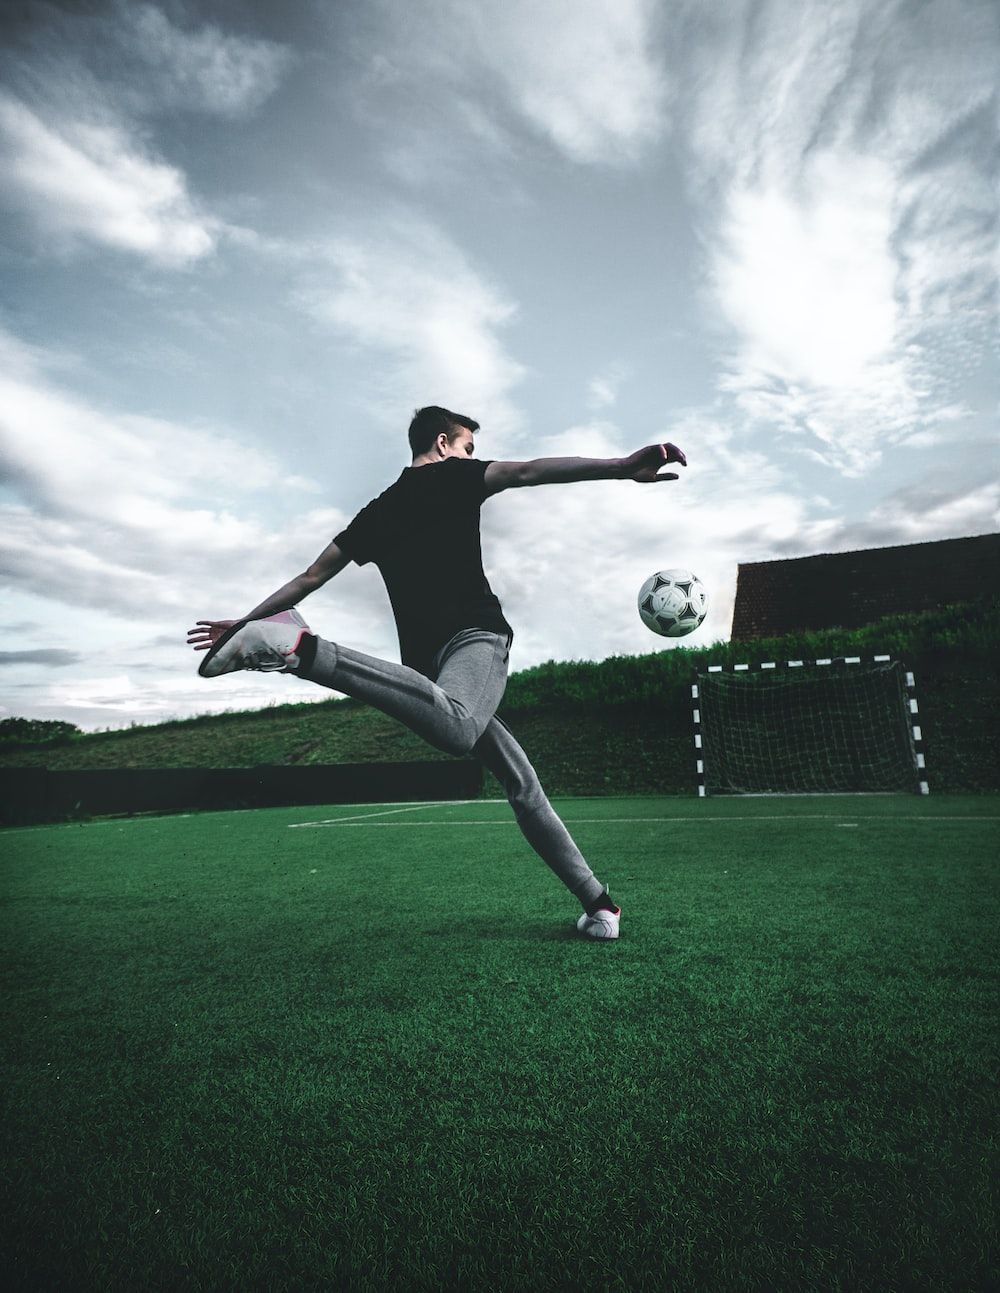 A man is kicking the soccer ball - Soccer